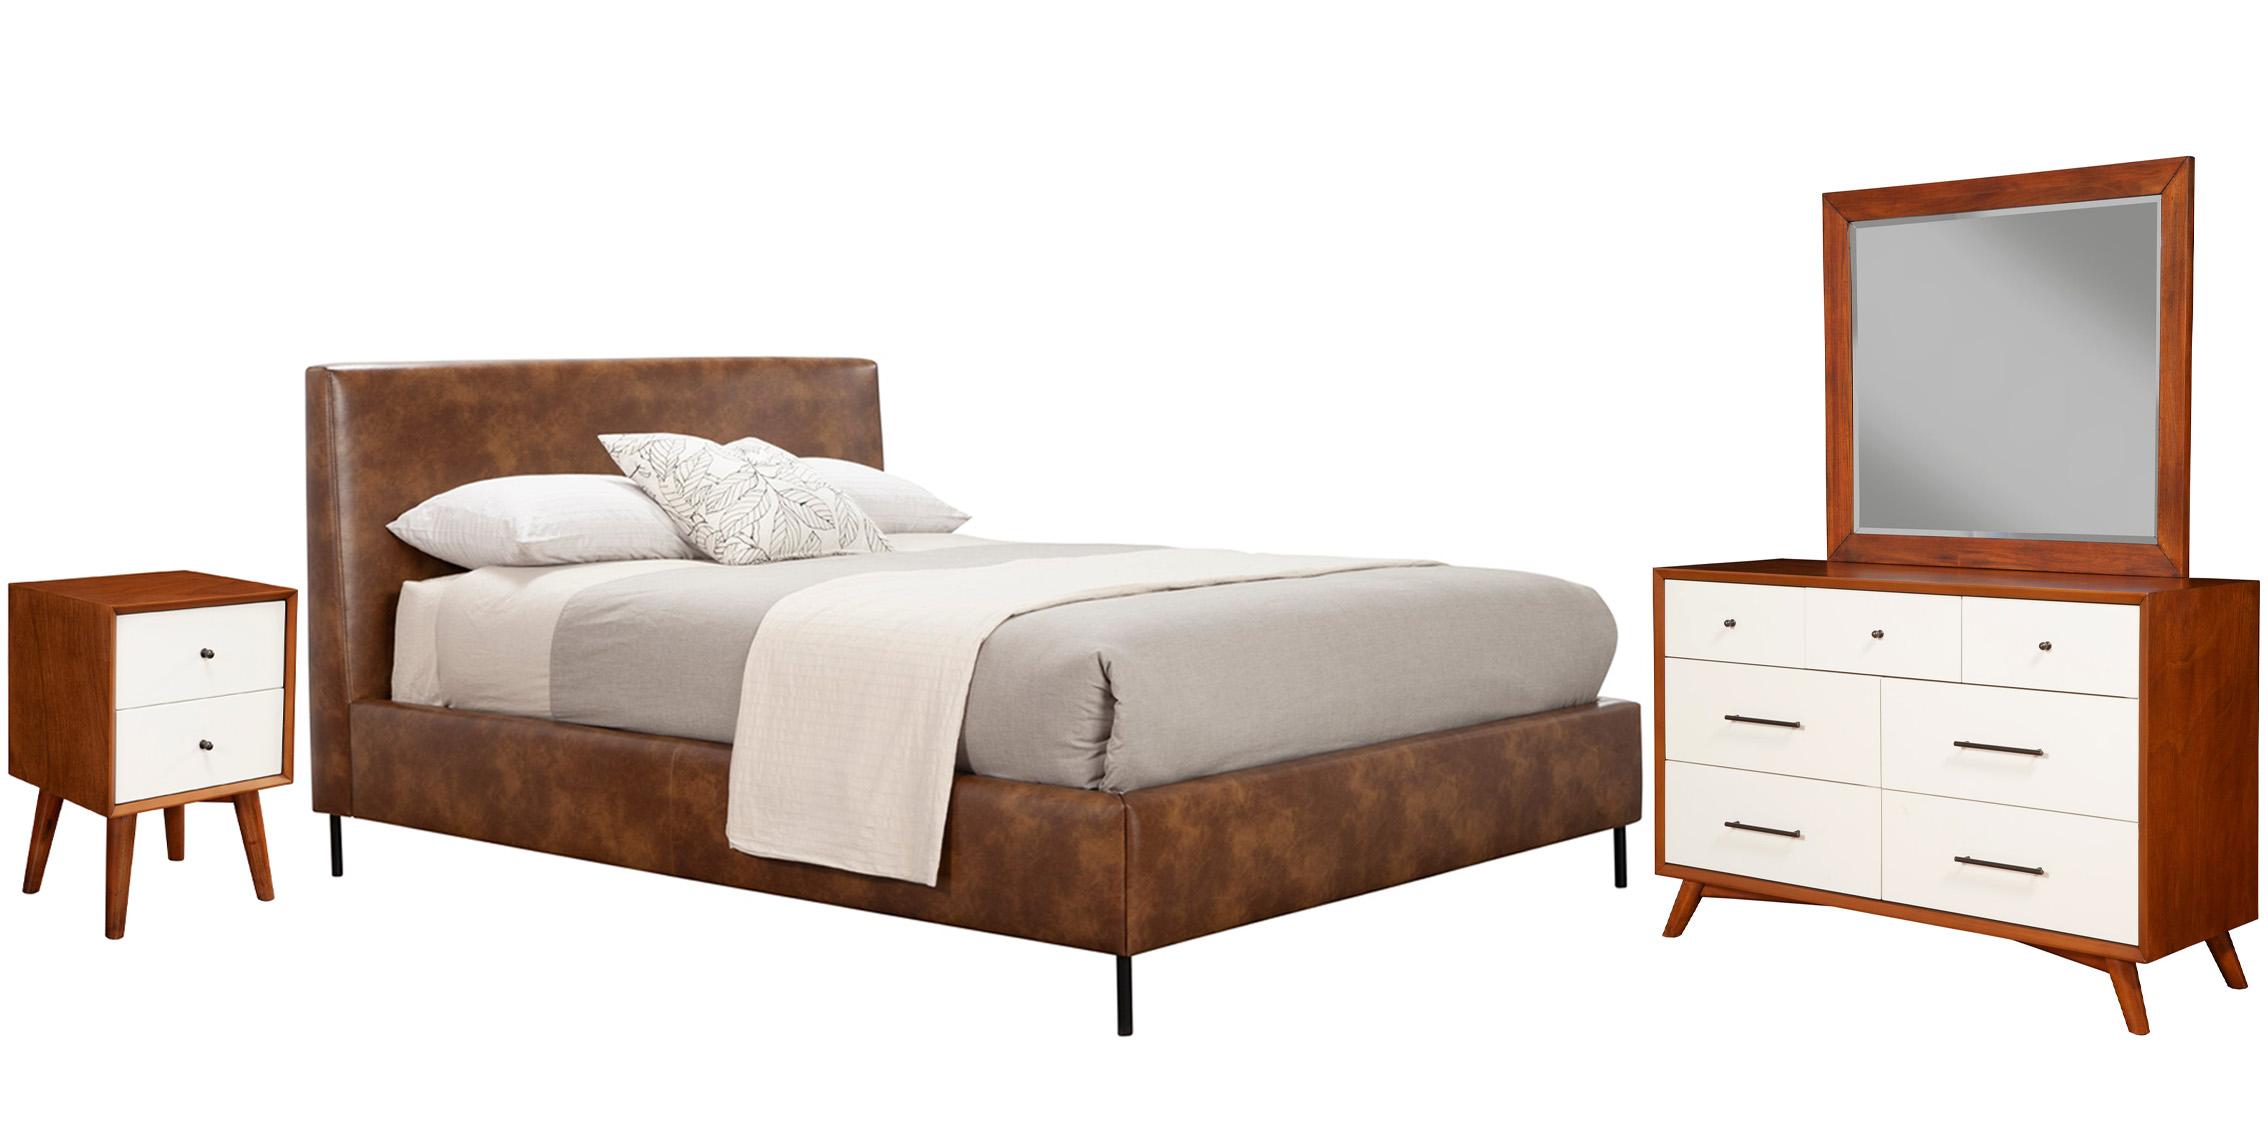 Modern, Rustic Platform Bedroom Set SOPHIA/FLYNN 6902Q-BRN-Set-4 in Brown Faux Leather